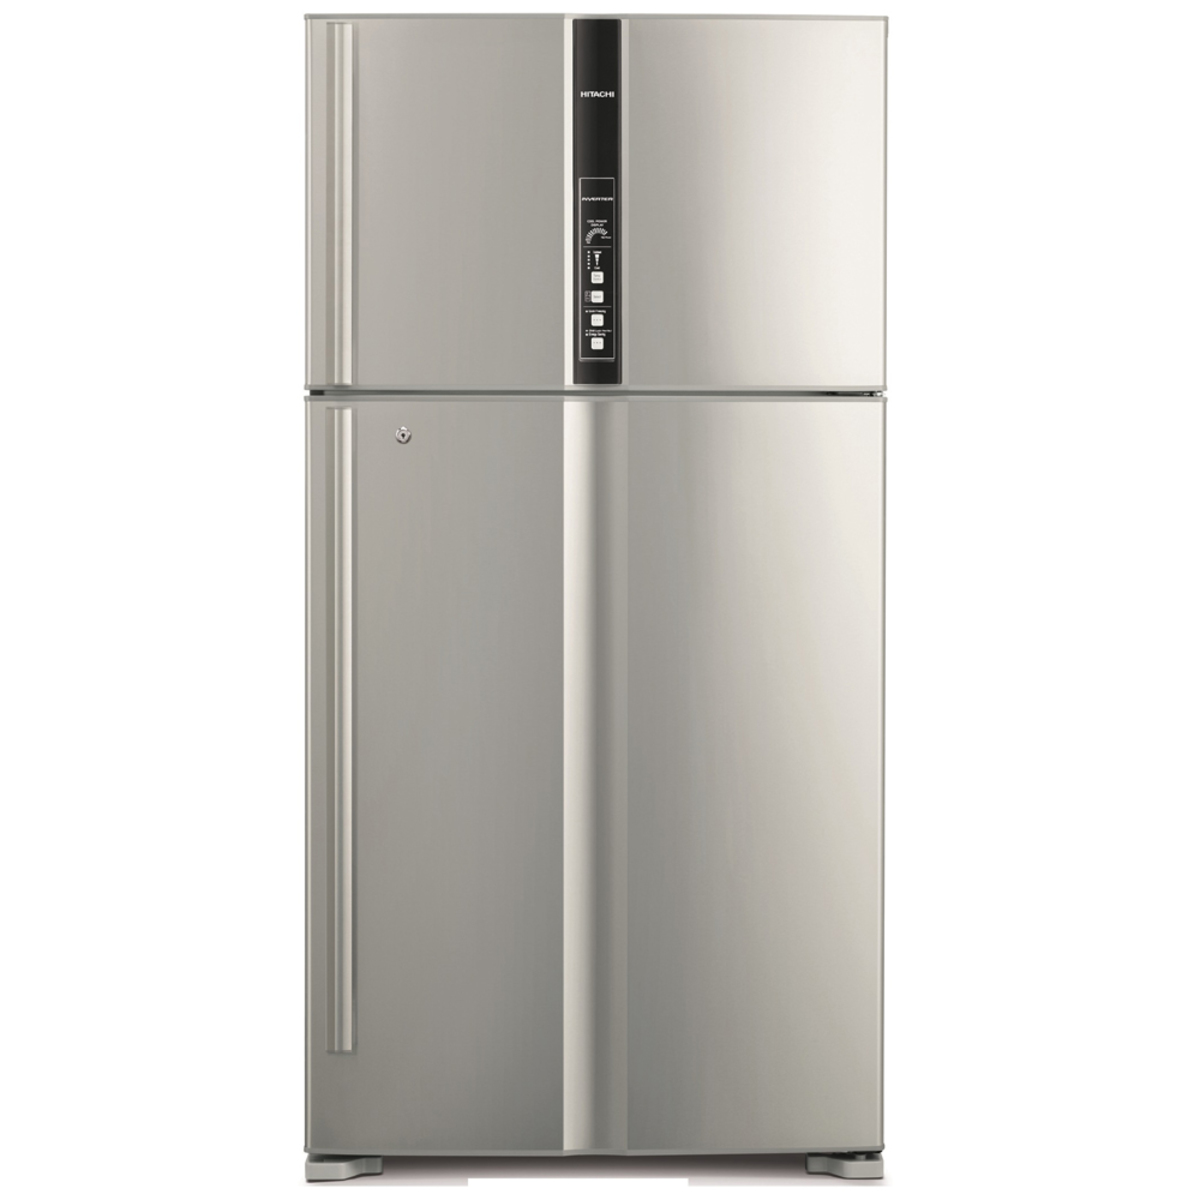 Hitachi Double Door Refrigerator RV720PUK1SLS 720 Ltr